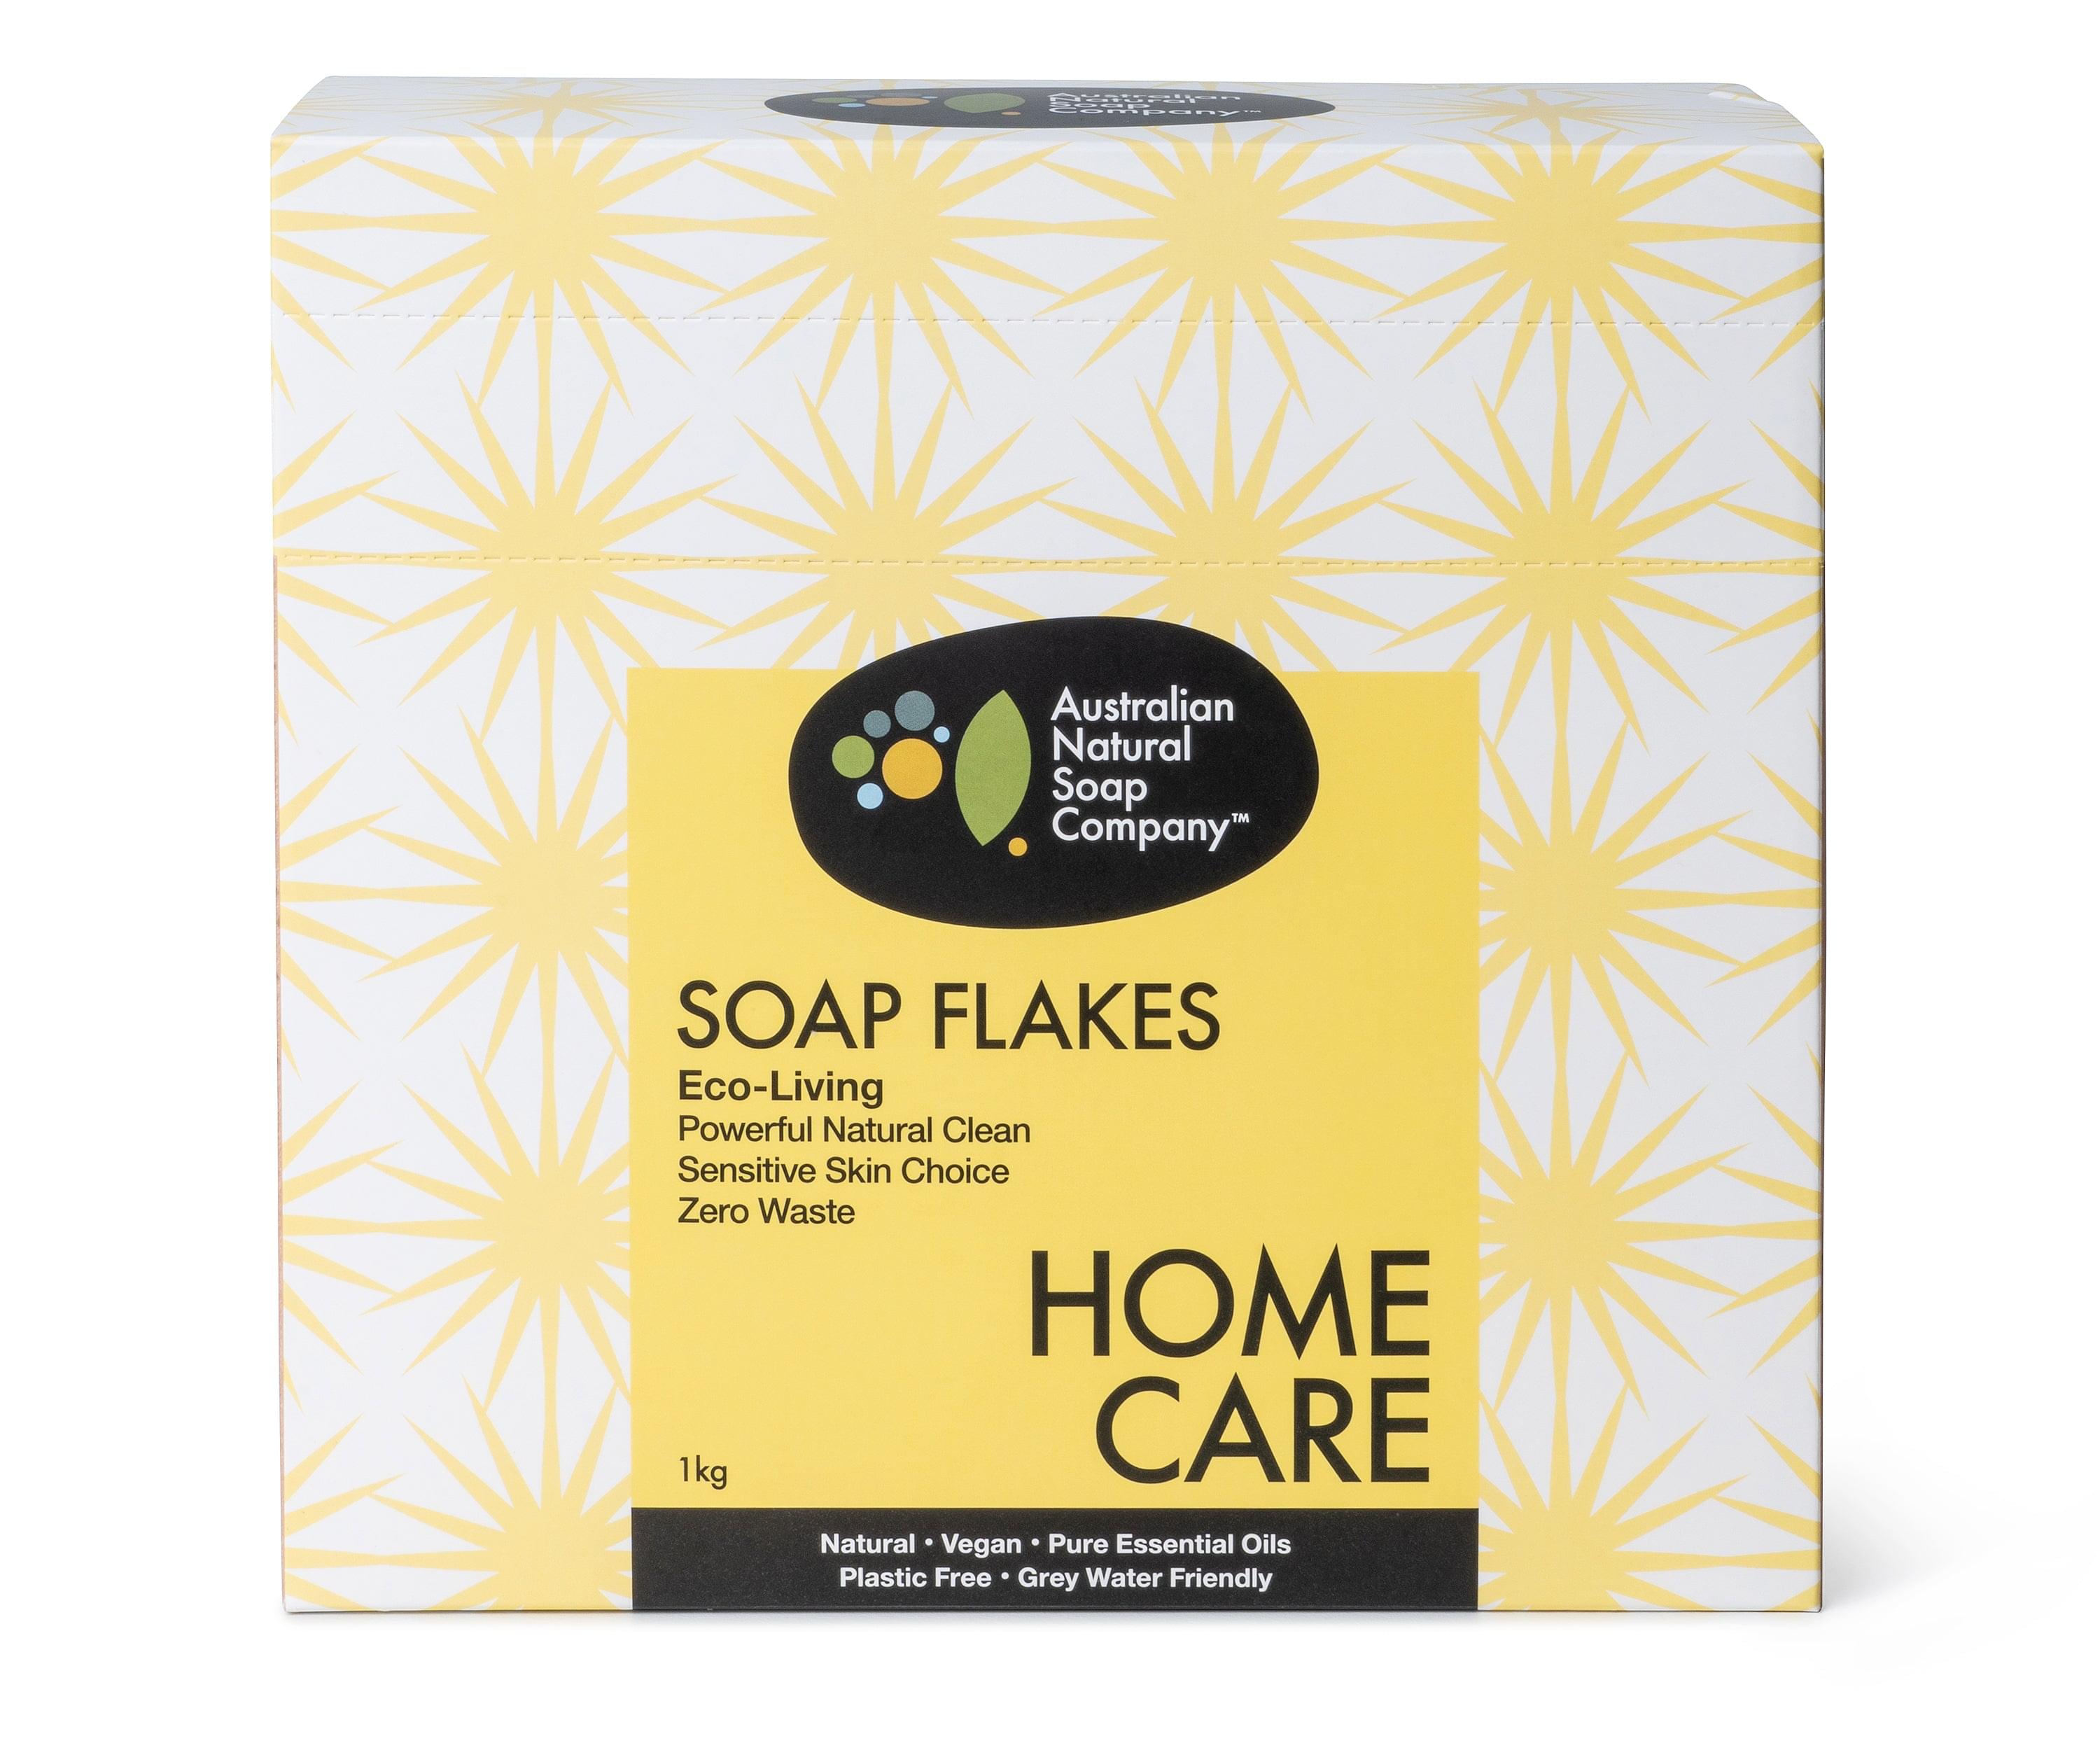 All Natural Soap Flakes